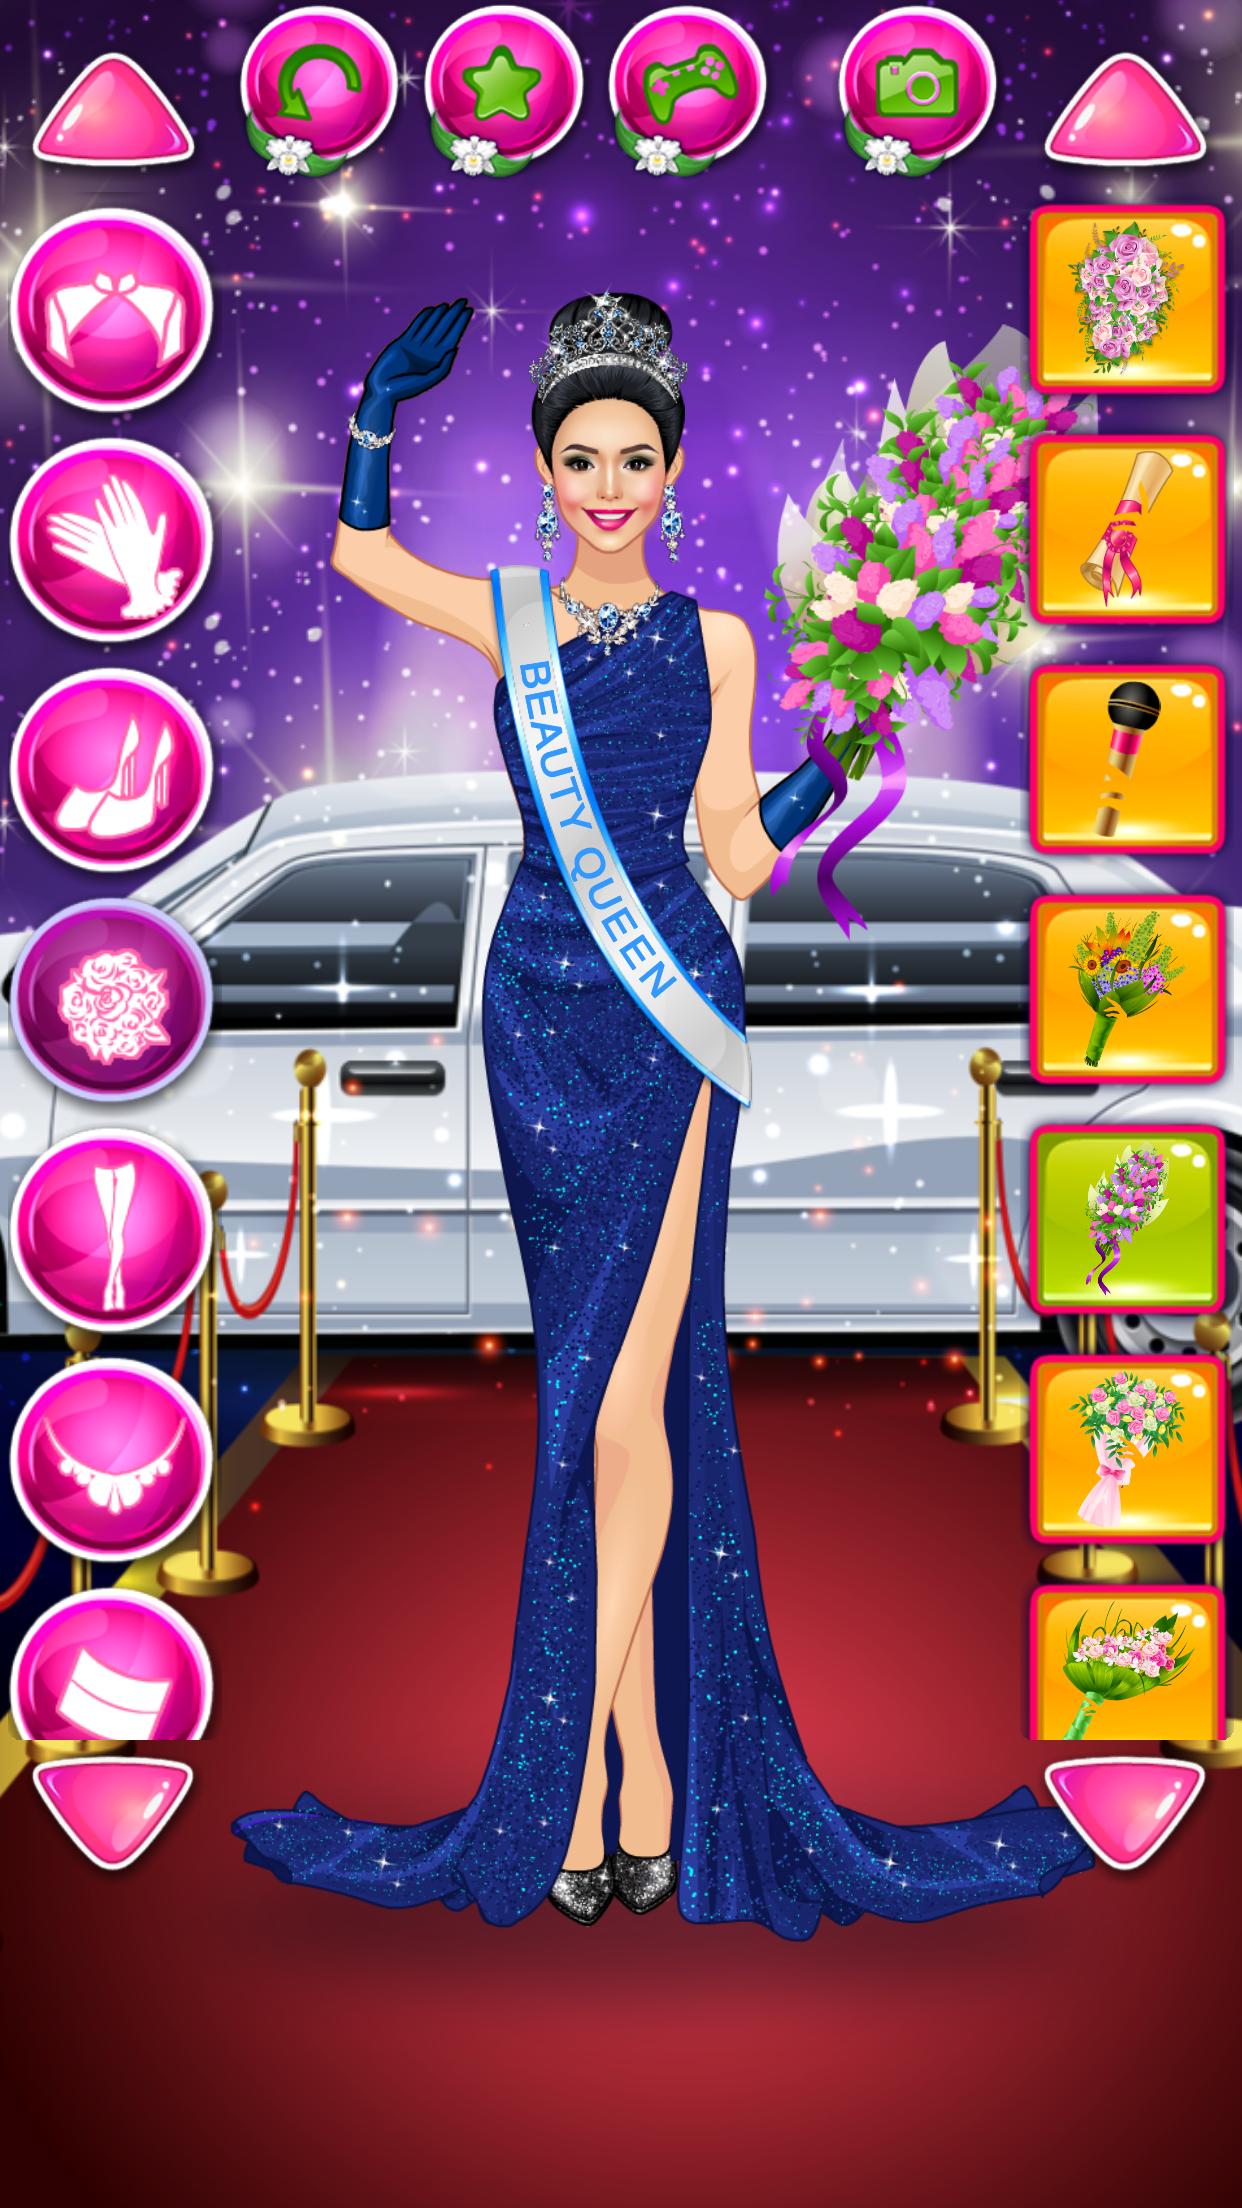 Beauty Queen Dress Up - Star Girl Fashion 1.1 Screenshot 18